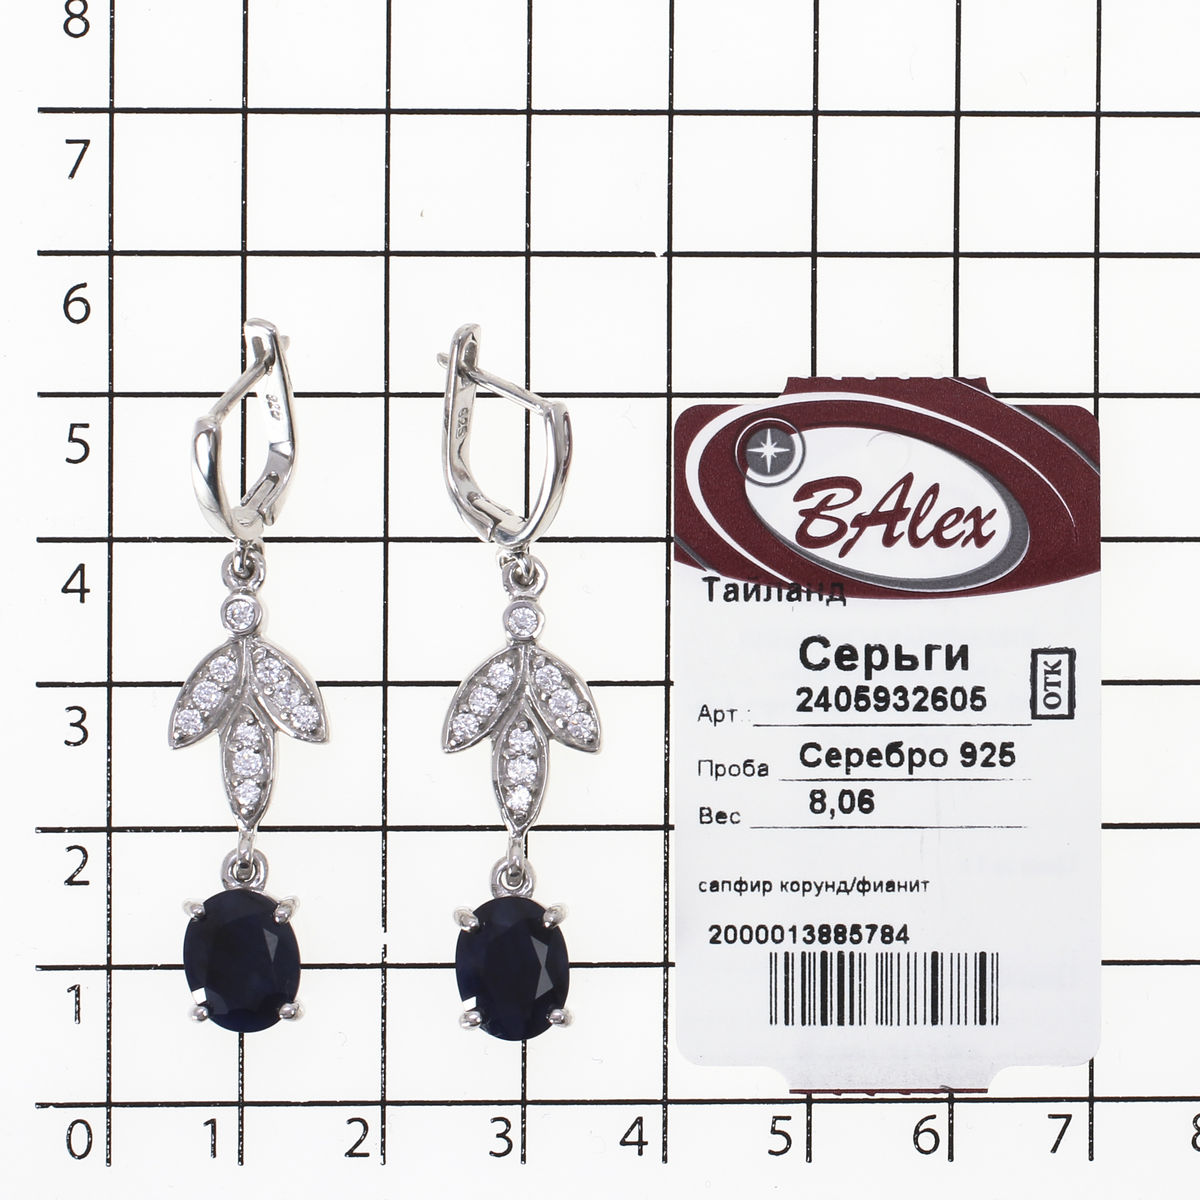 Серьги женские из серебра Balex Jewellery 2405932605, сапфир/фианит